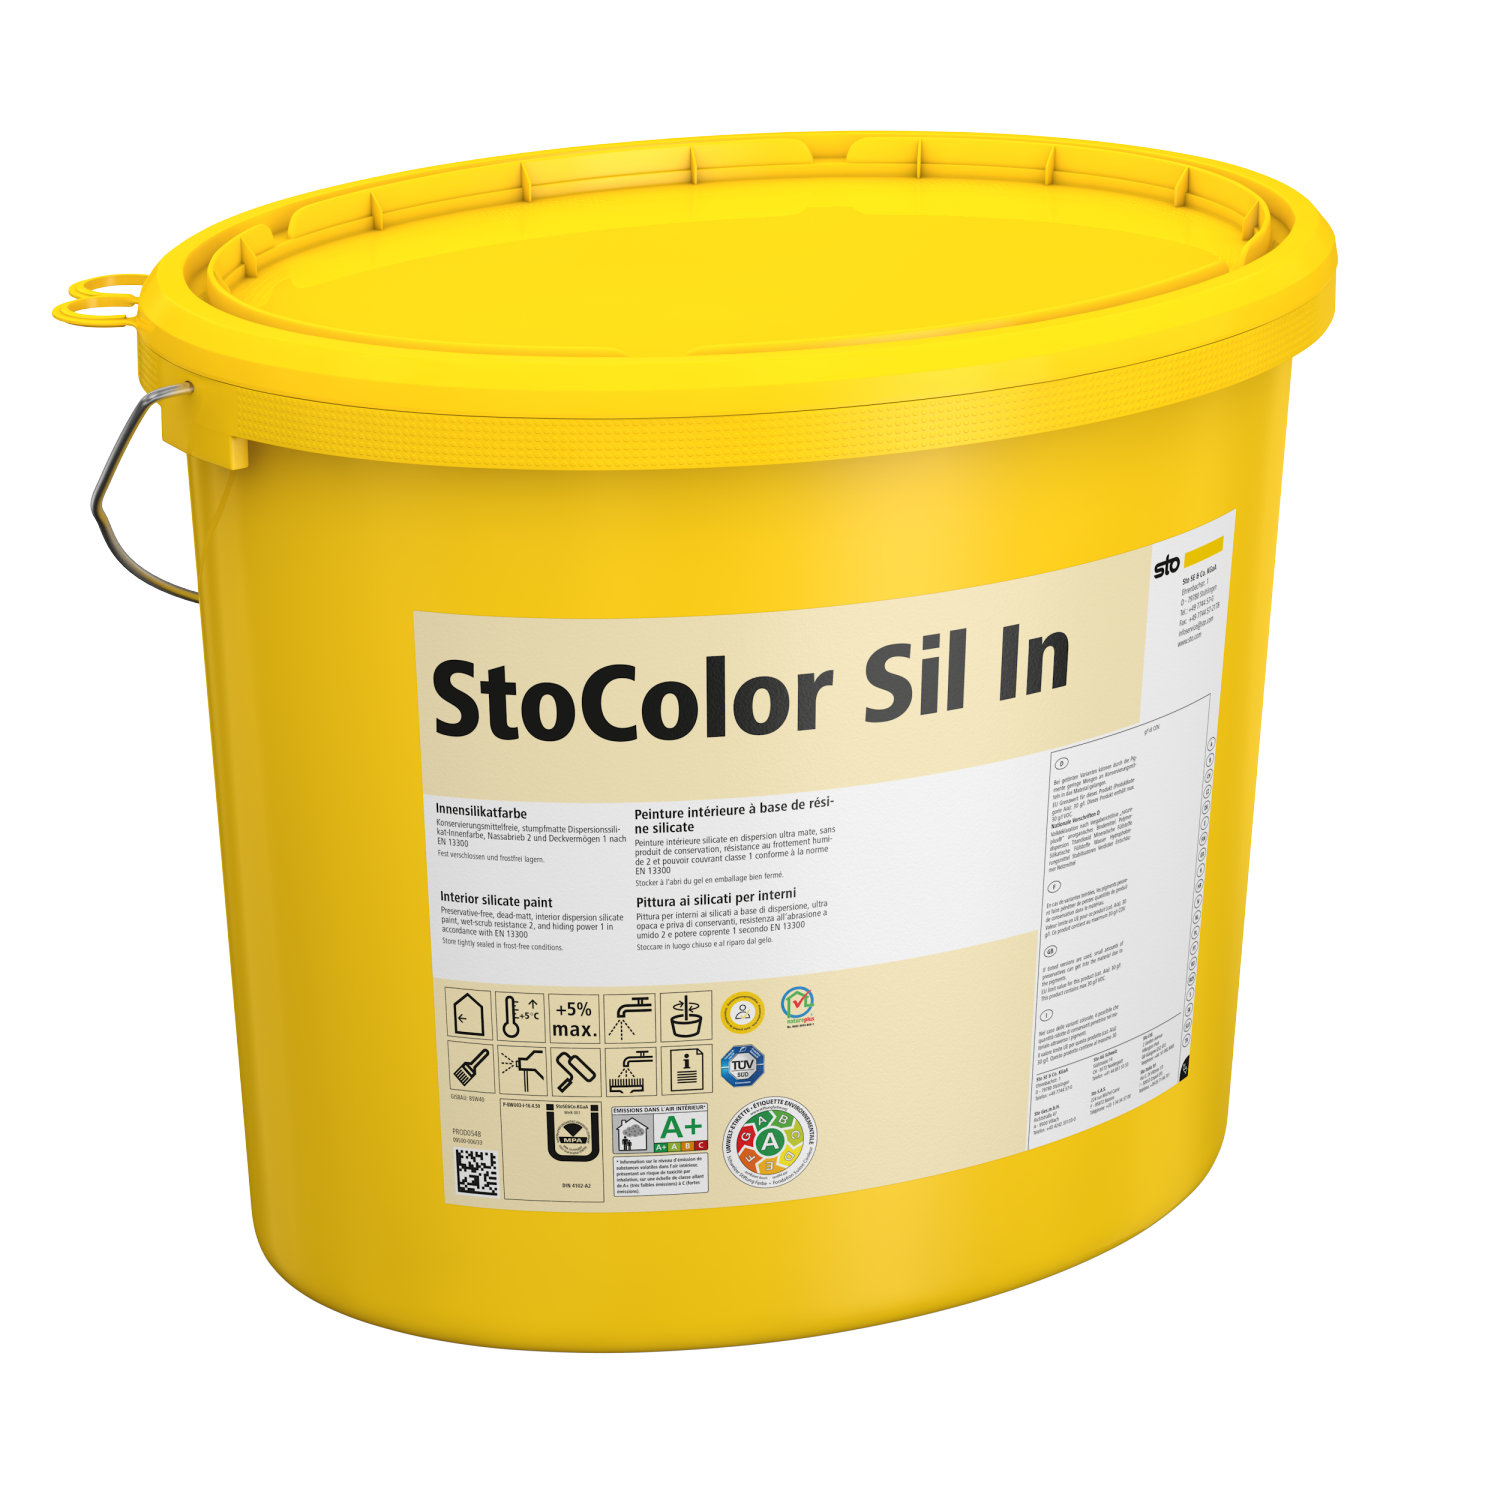 StoColorSilIn-1.jpeg